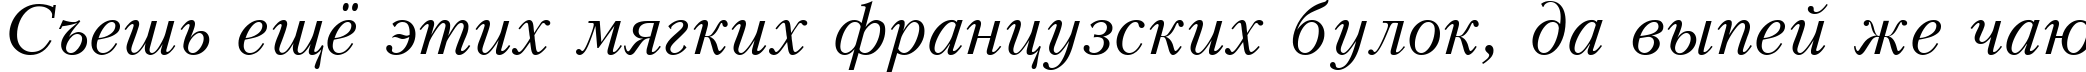 Пример написания шрифтом Kudrashov Italic:001.001 текста на русском